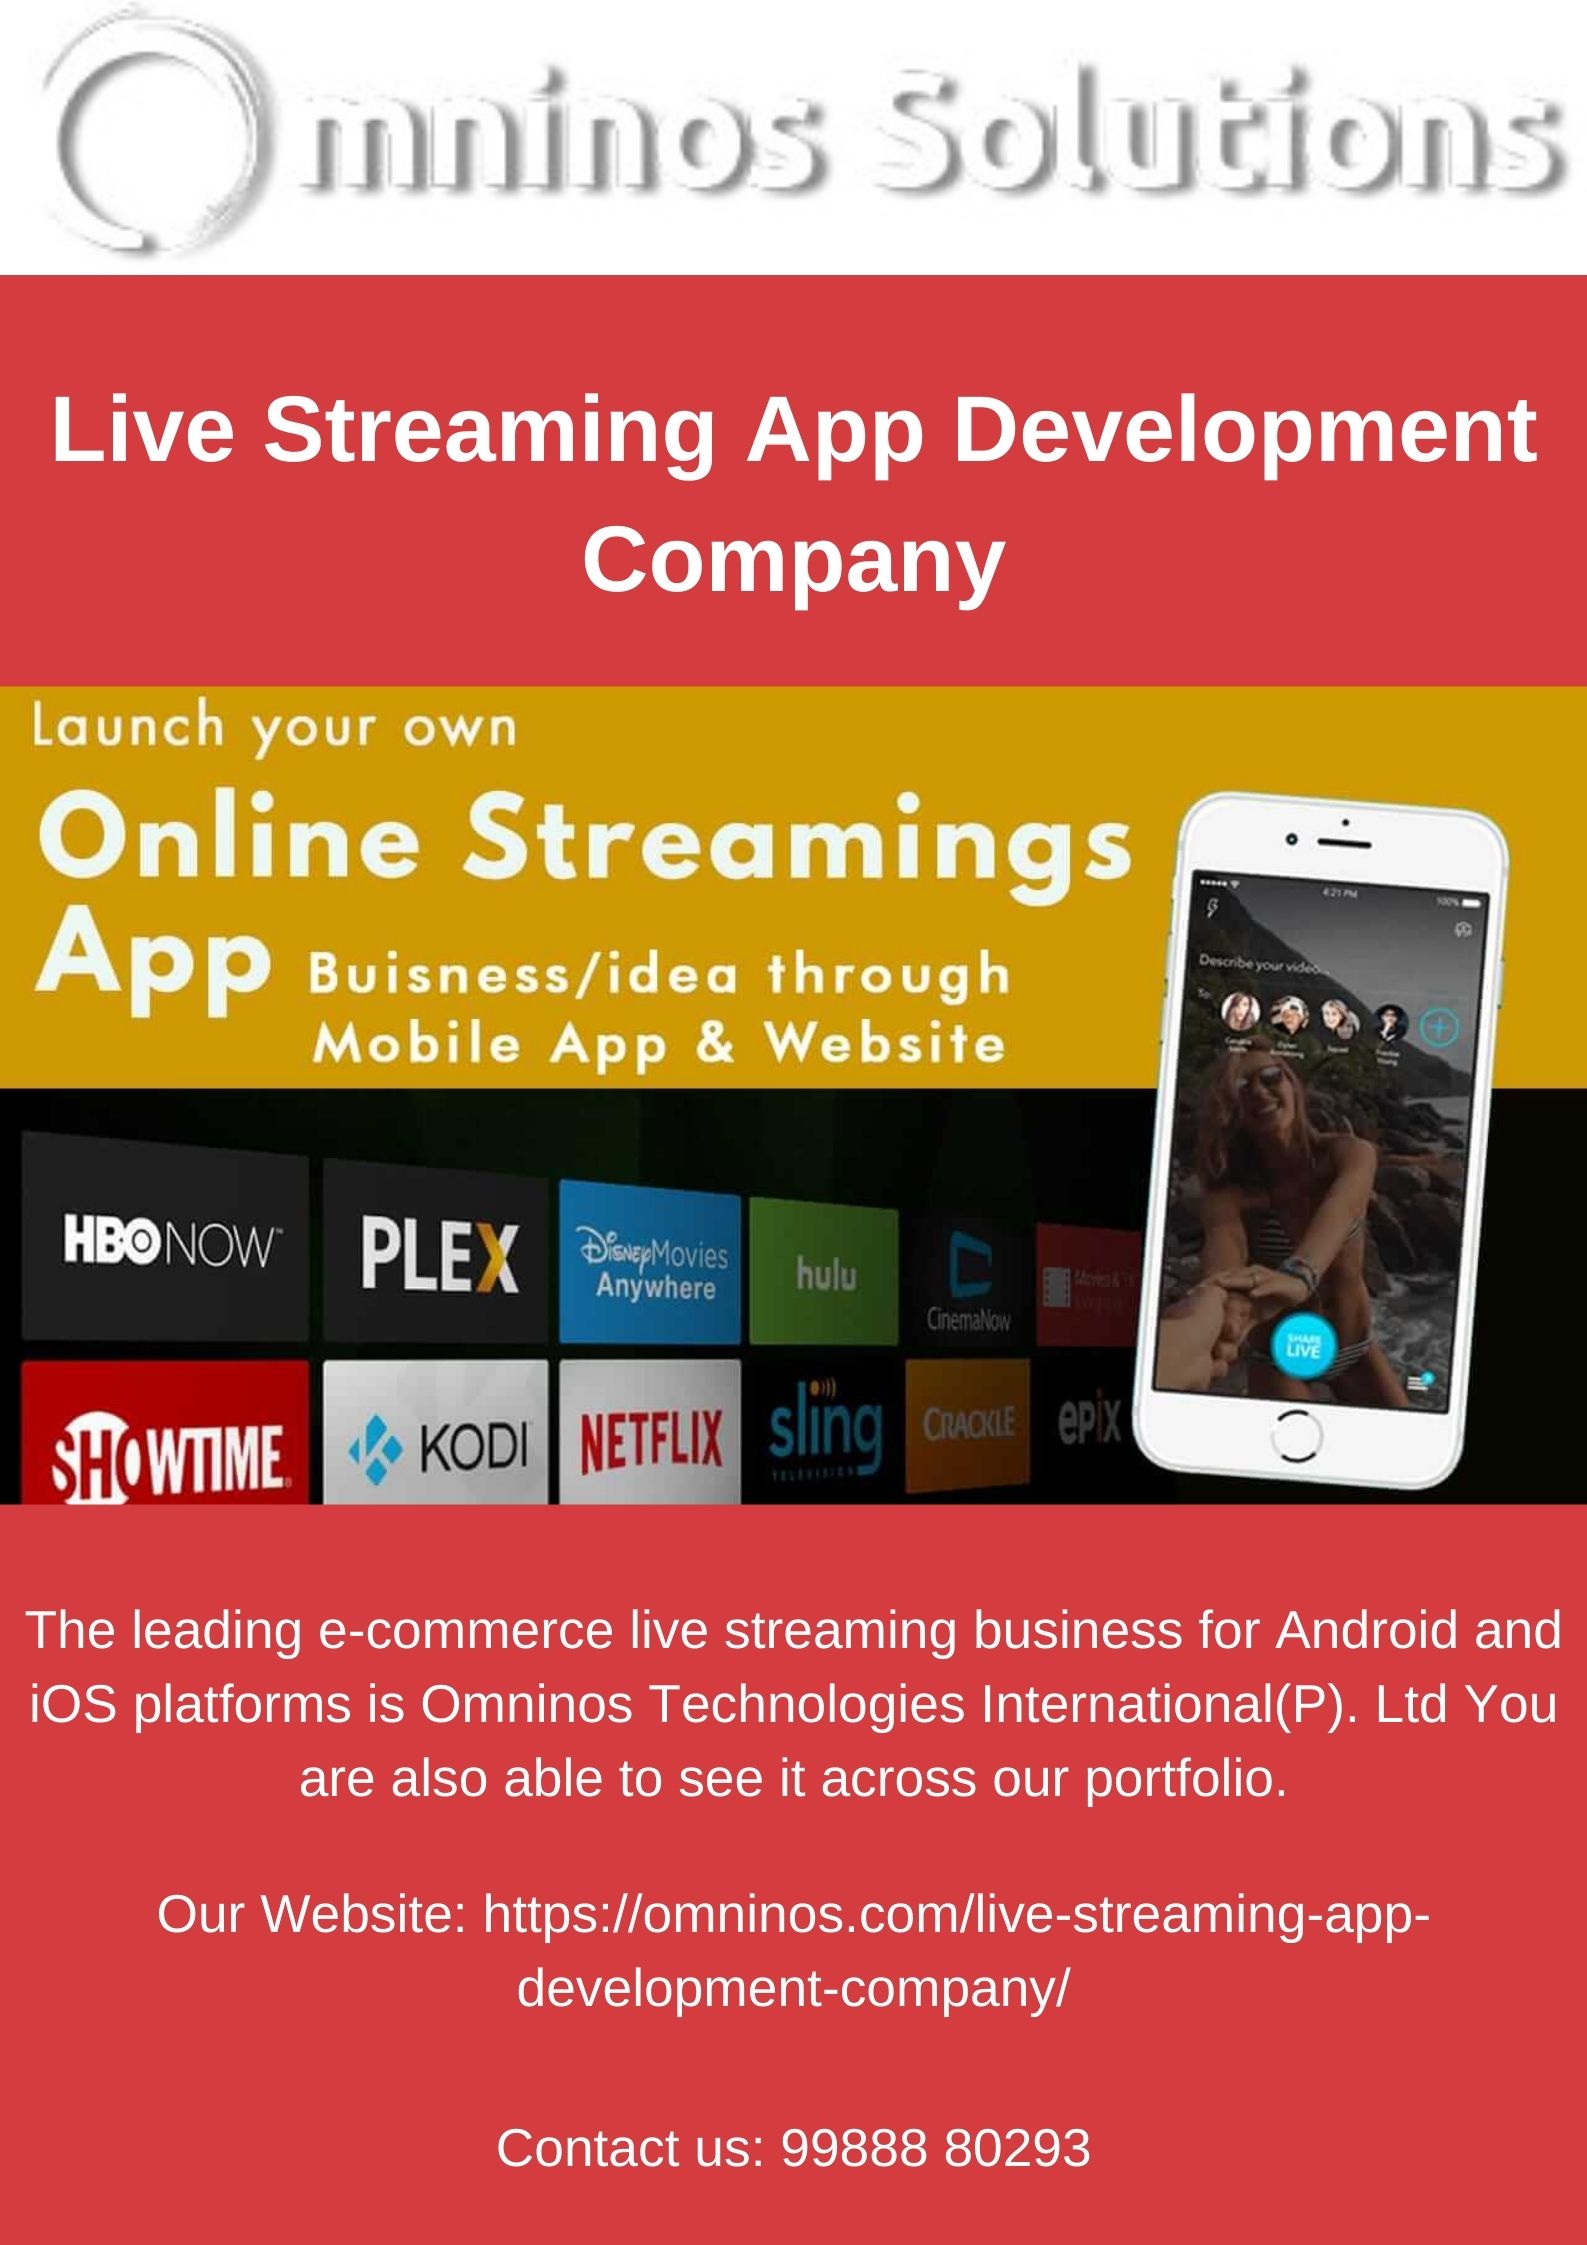 Omninos Solutions- Live Streaming App Development Company.jpg  by amritkaur